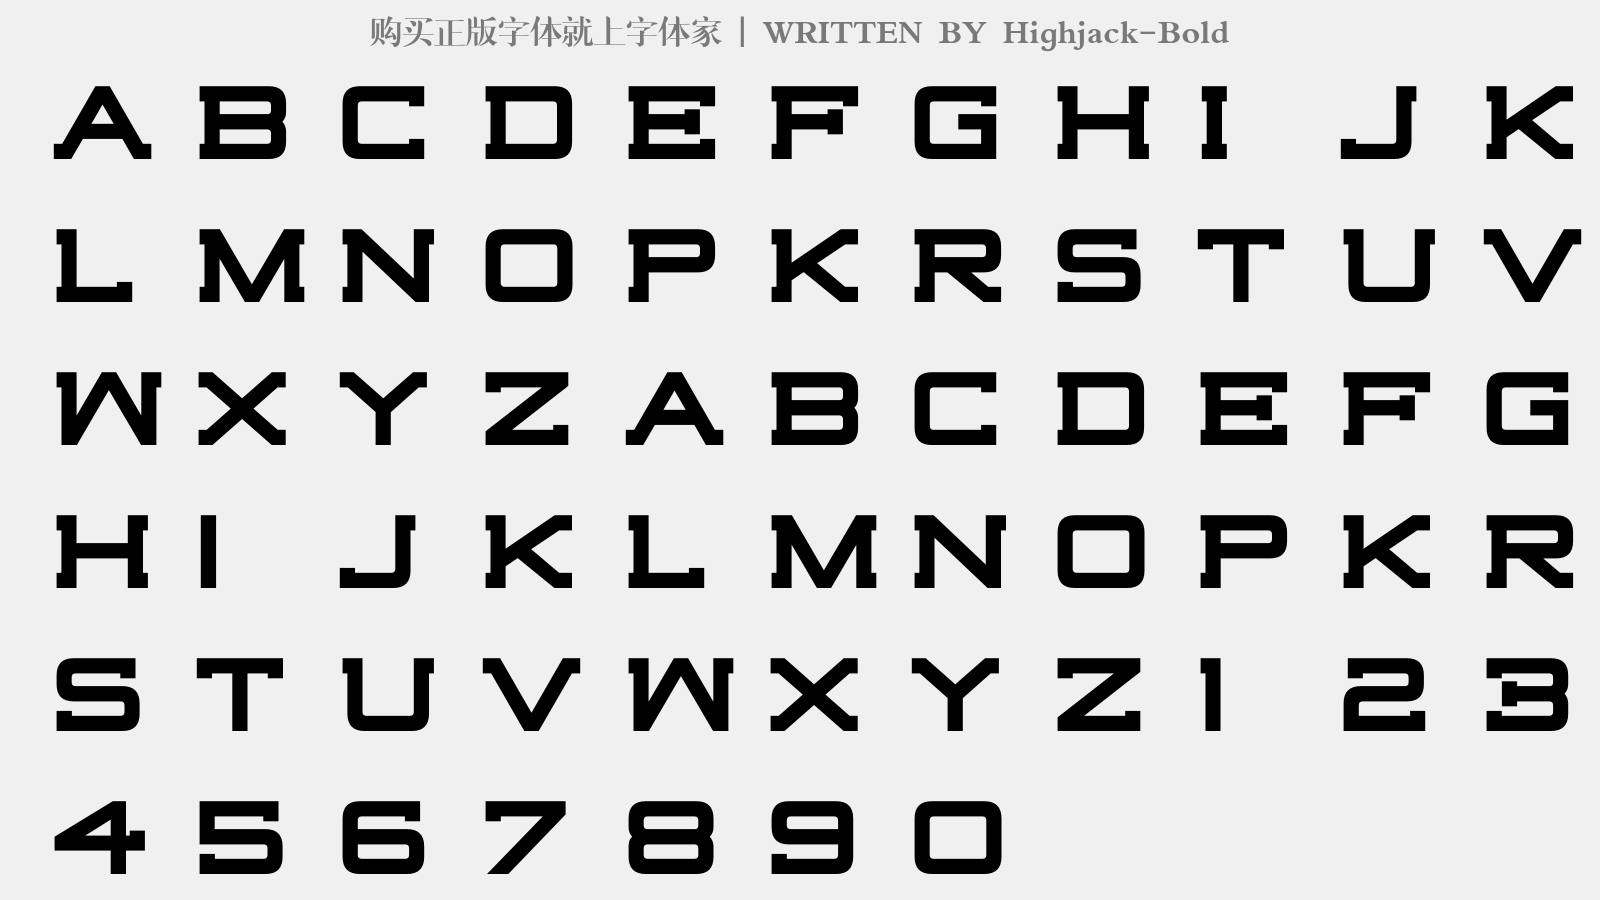 Highjack-Bold - 大写字母/小写字母/数字